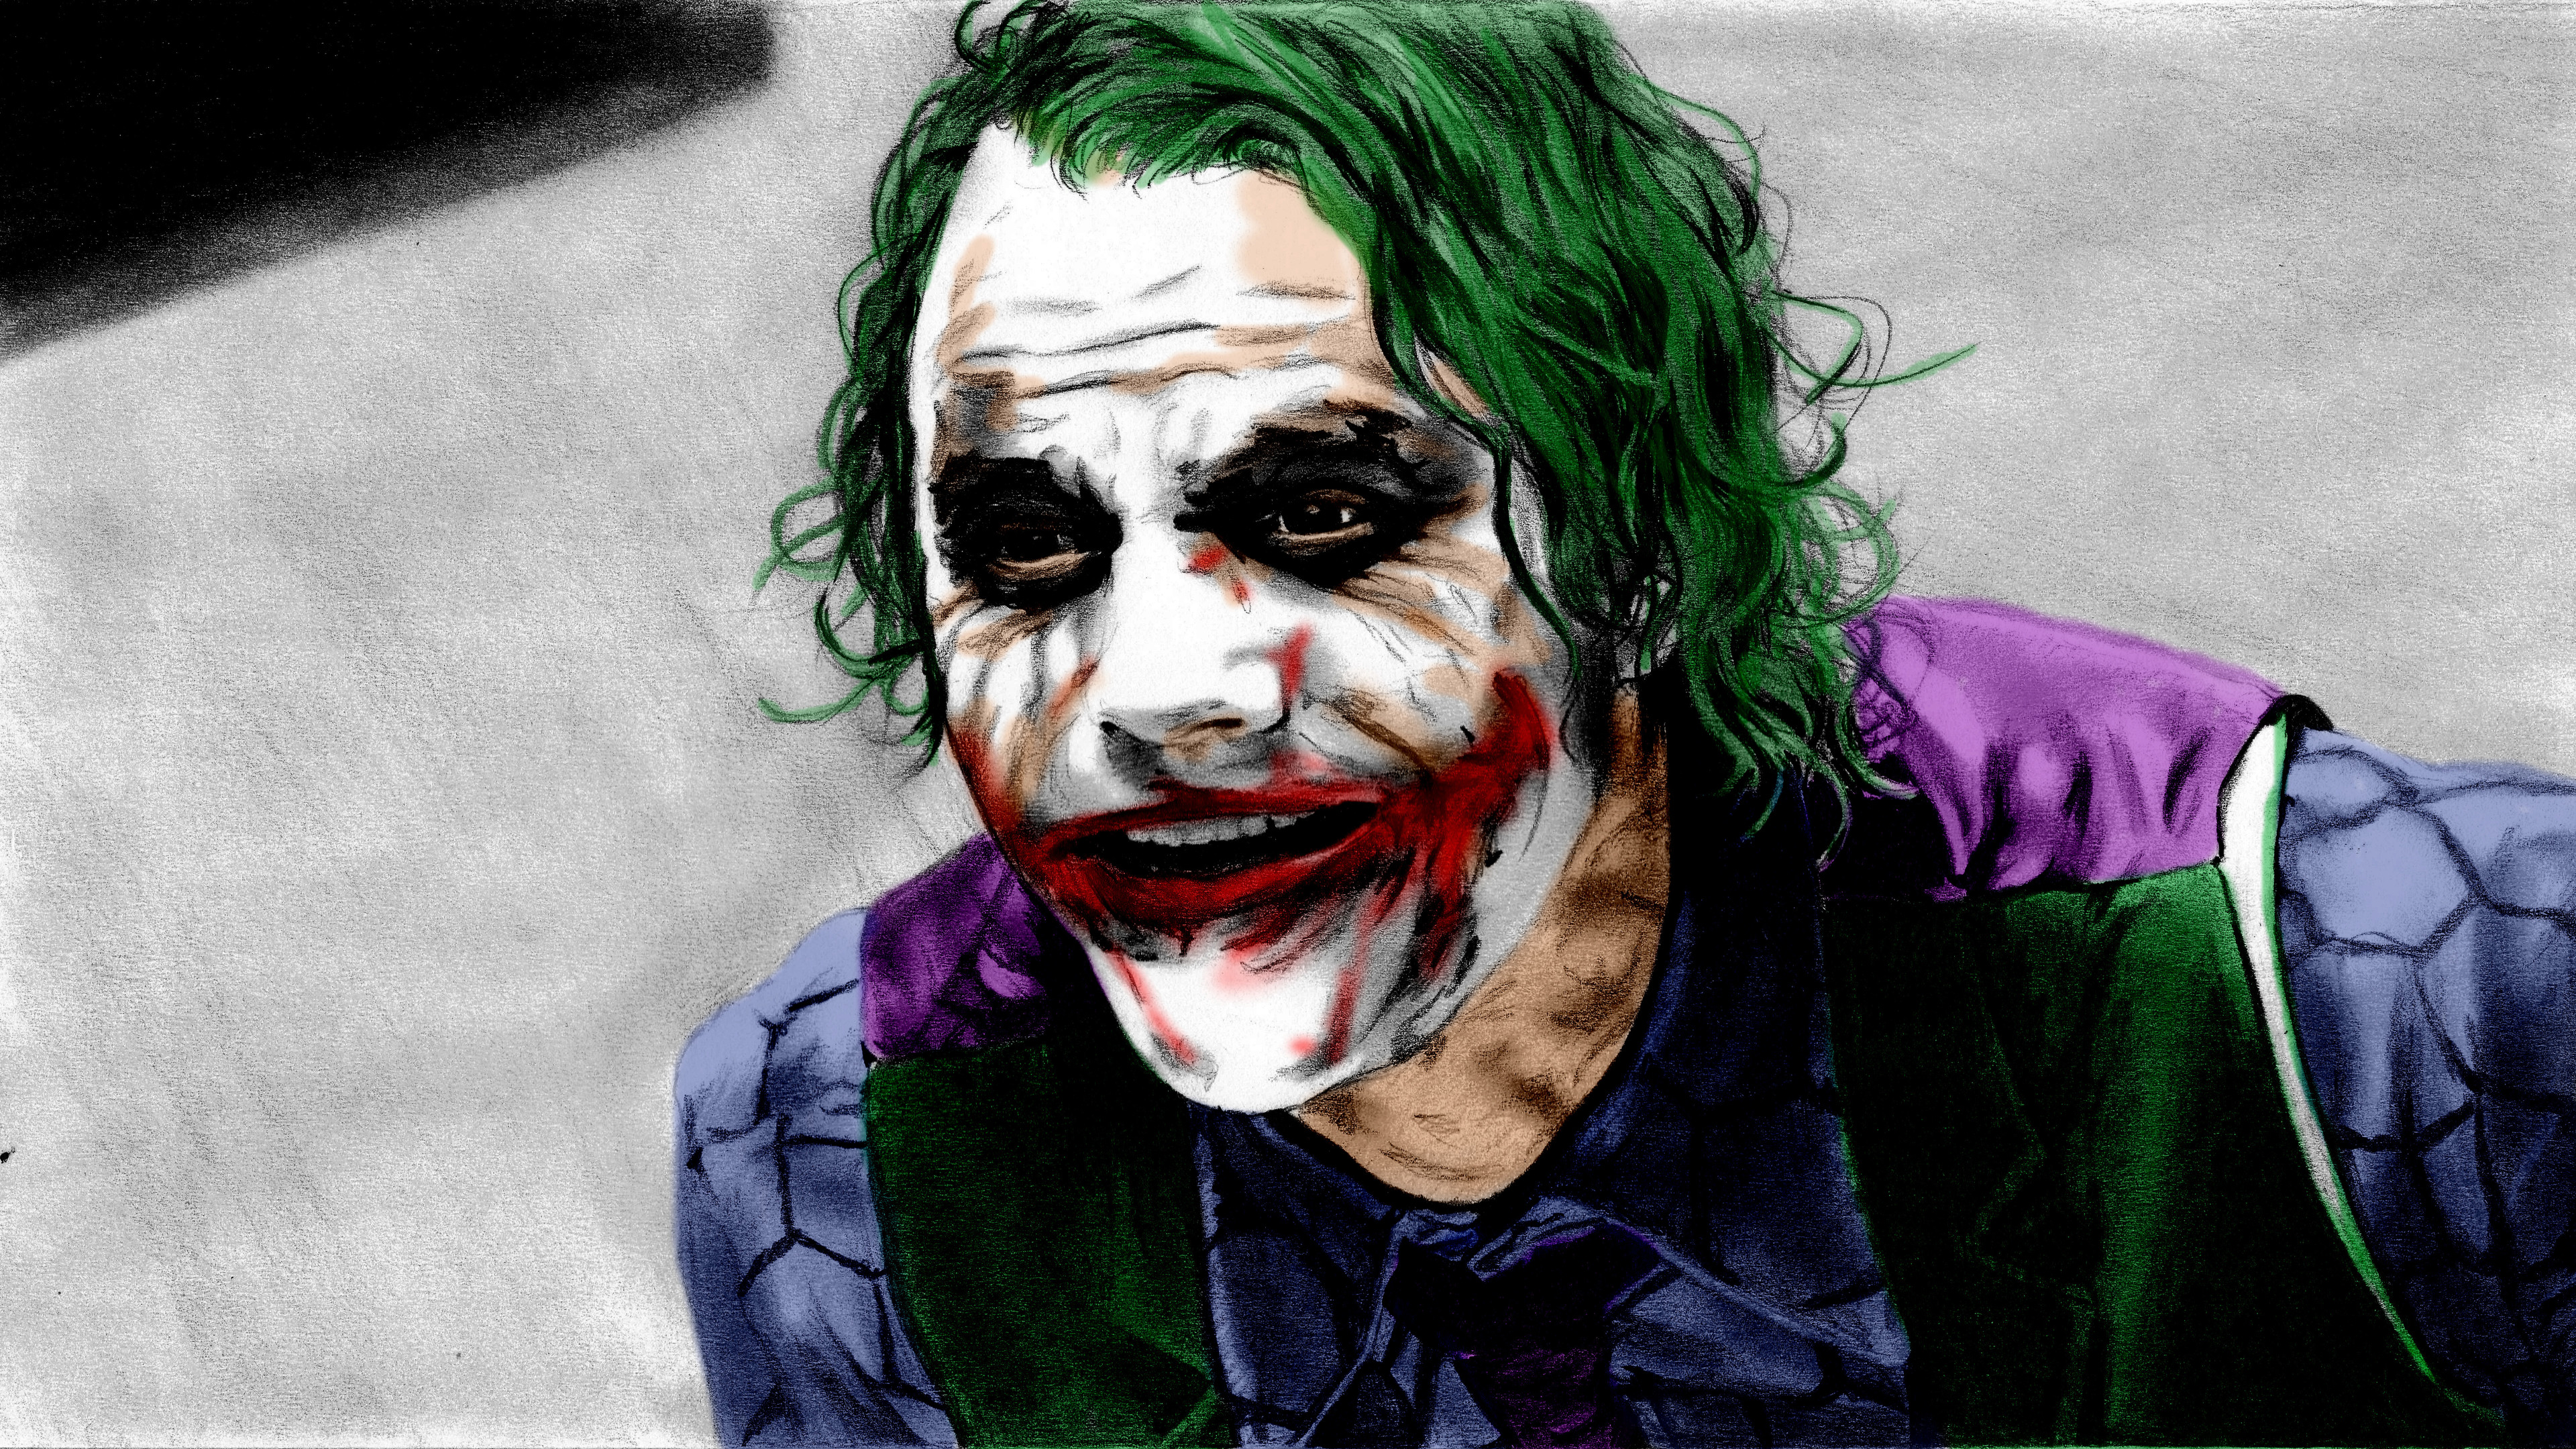 100+] Dark Knight Joker In 4k Ultra Hd Wallpapers | Wallpapers.com